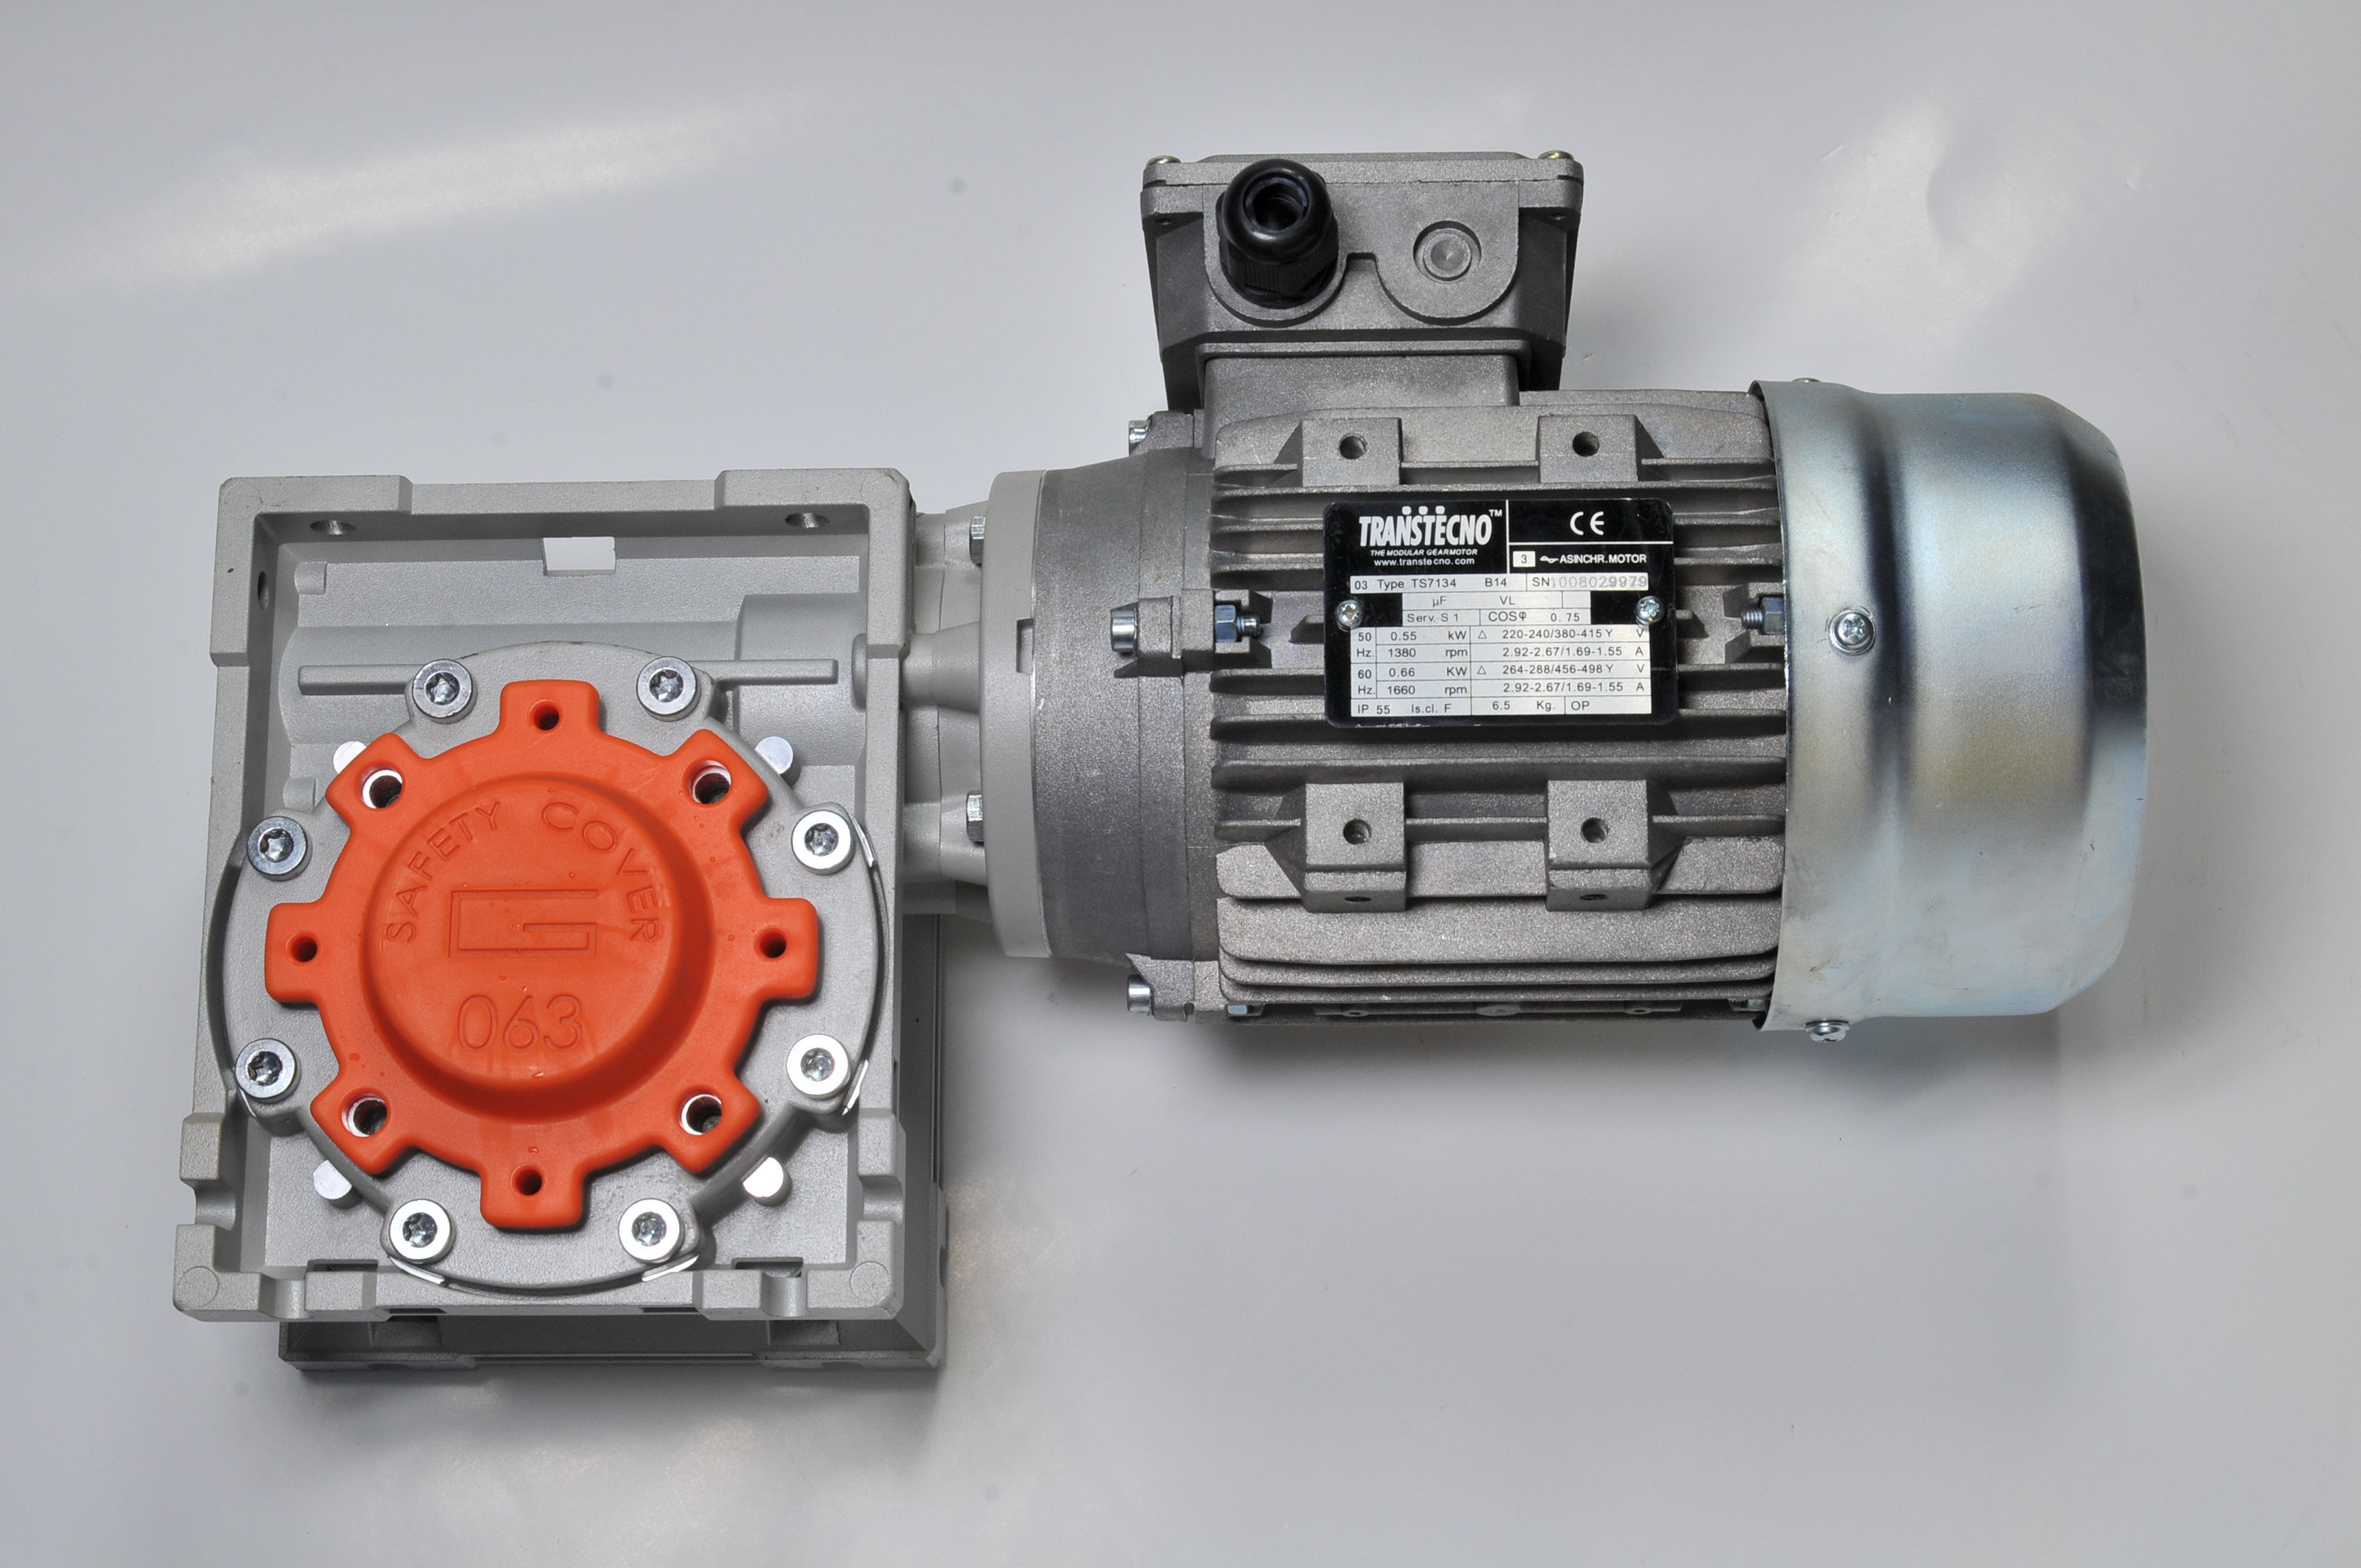 Askskruvsmotor, Transtecno NMRV063-60-071B14, 0,55 kW